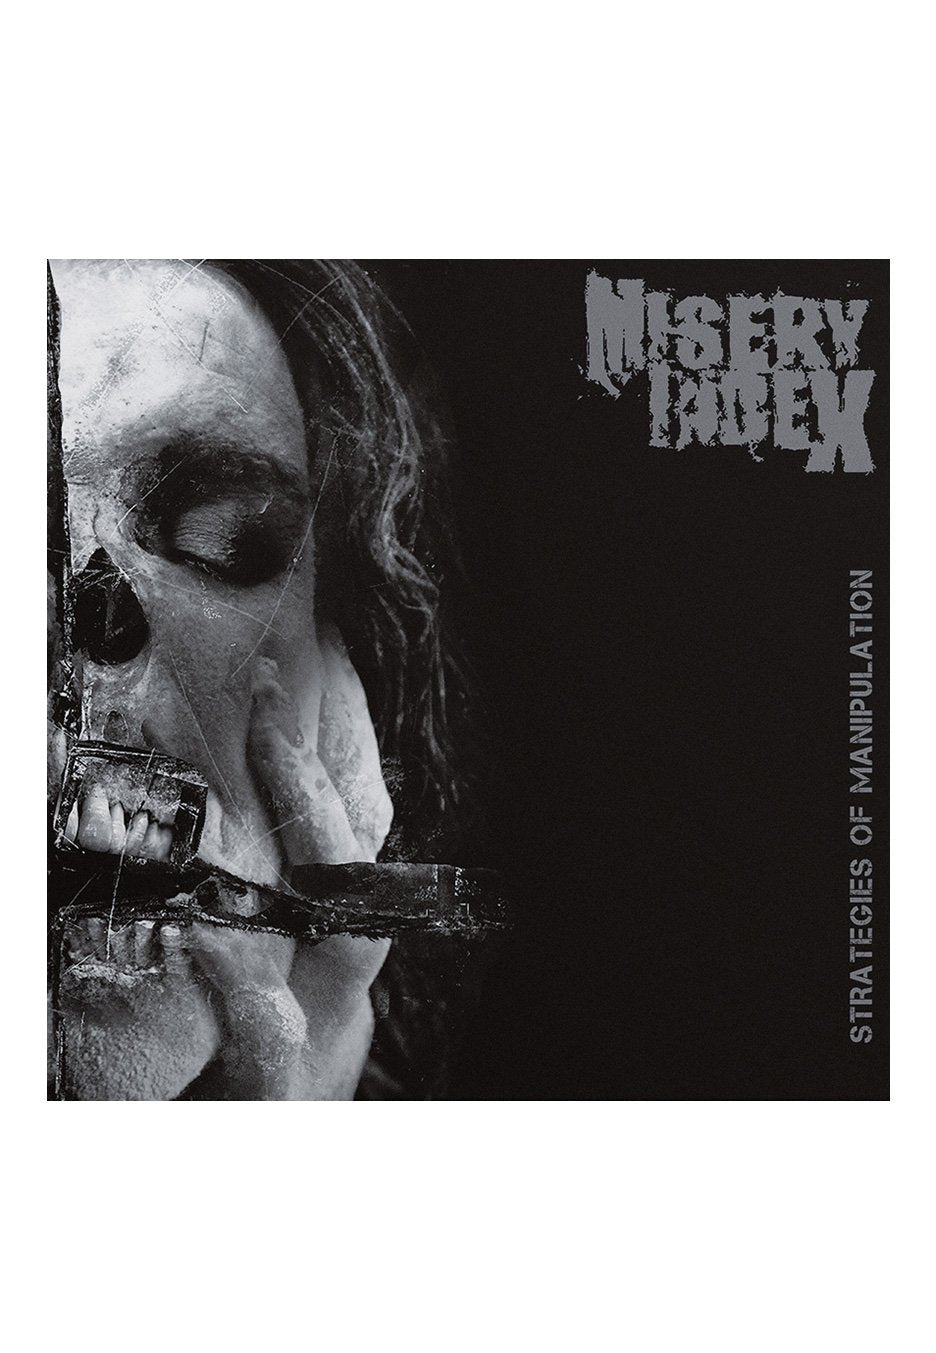 Misery Index - Strategies Of Manipulation EP - Vinyl